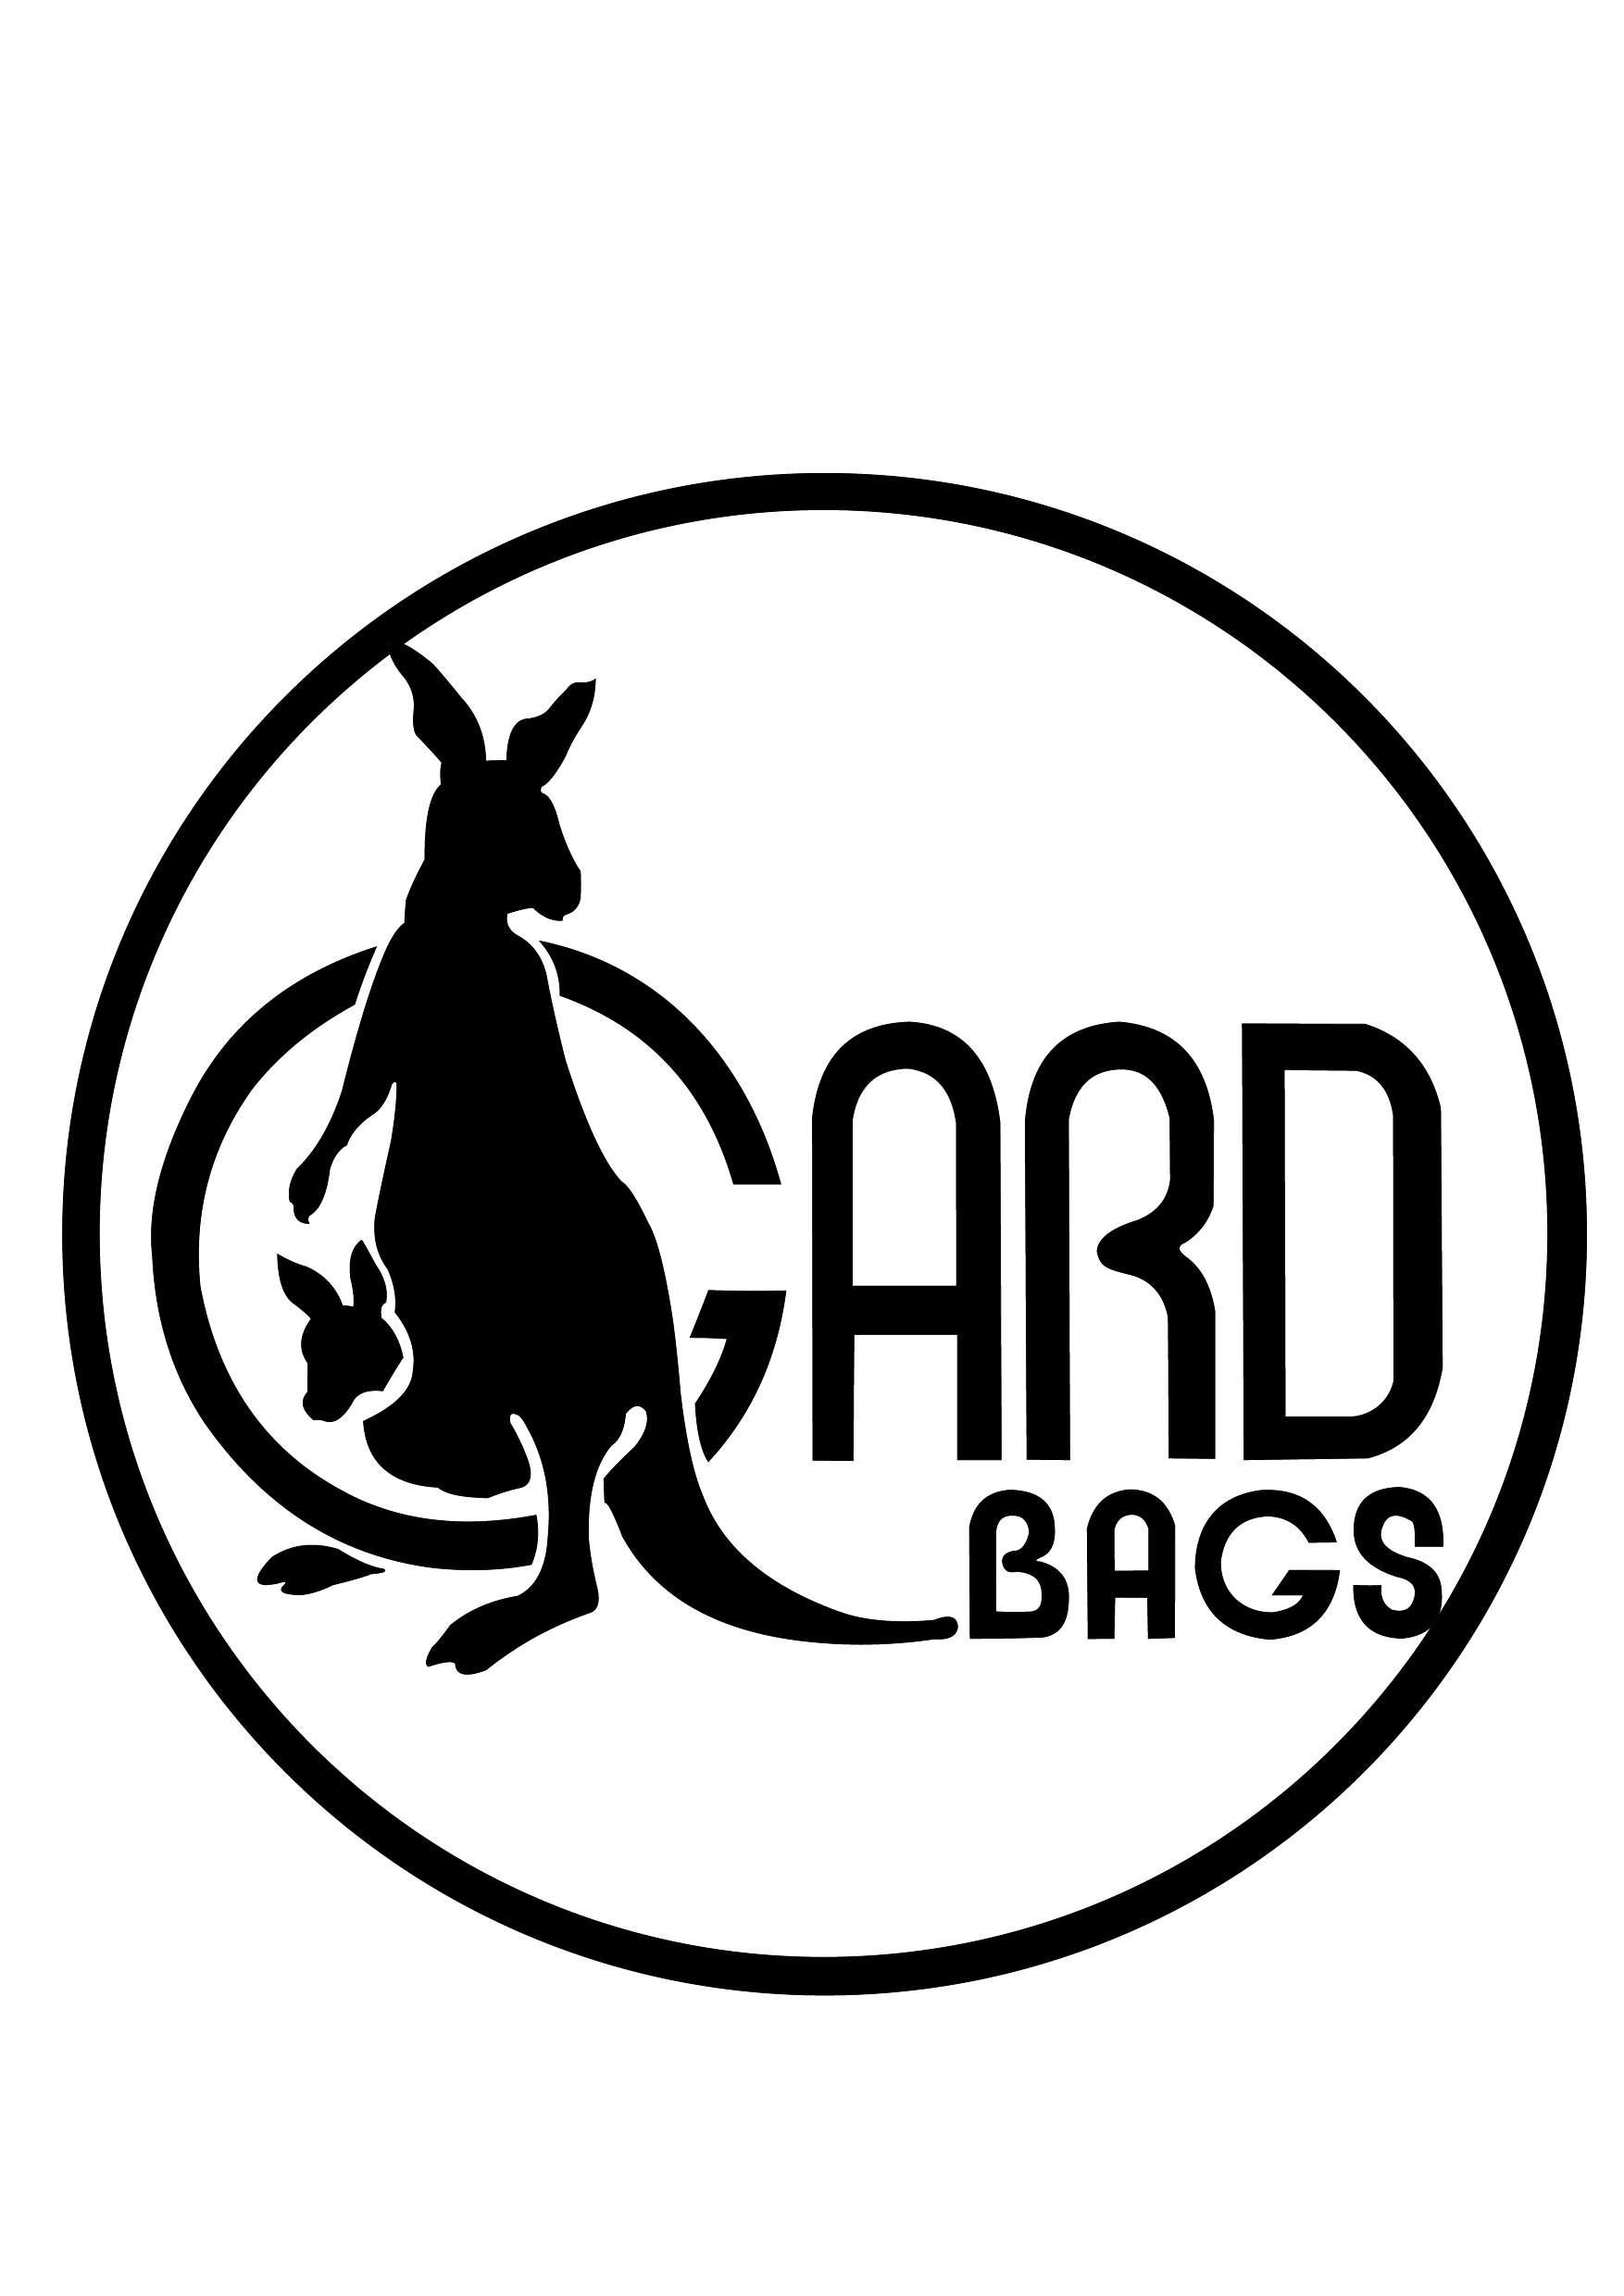 Gard Bags